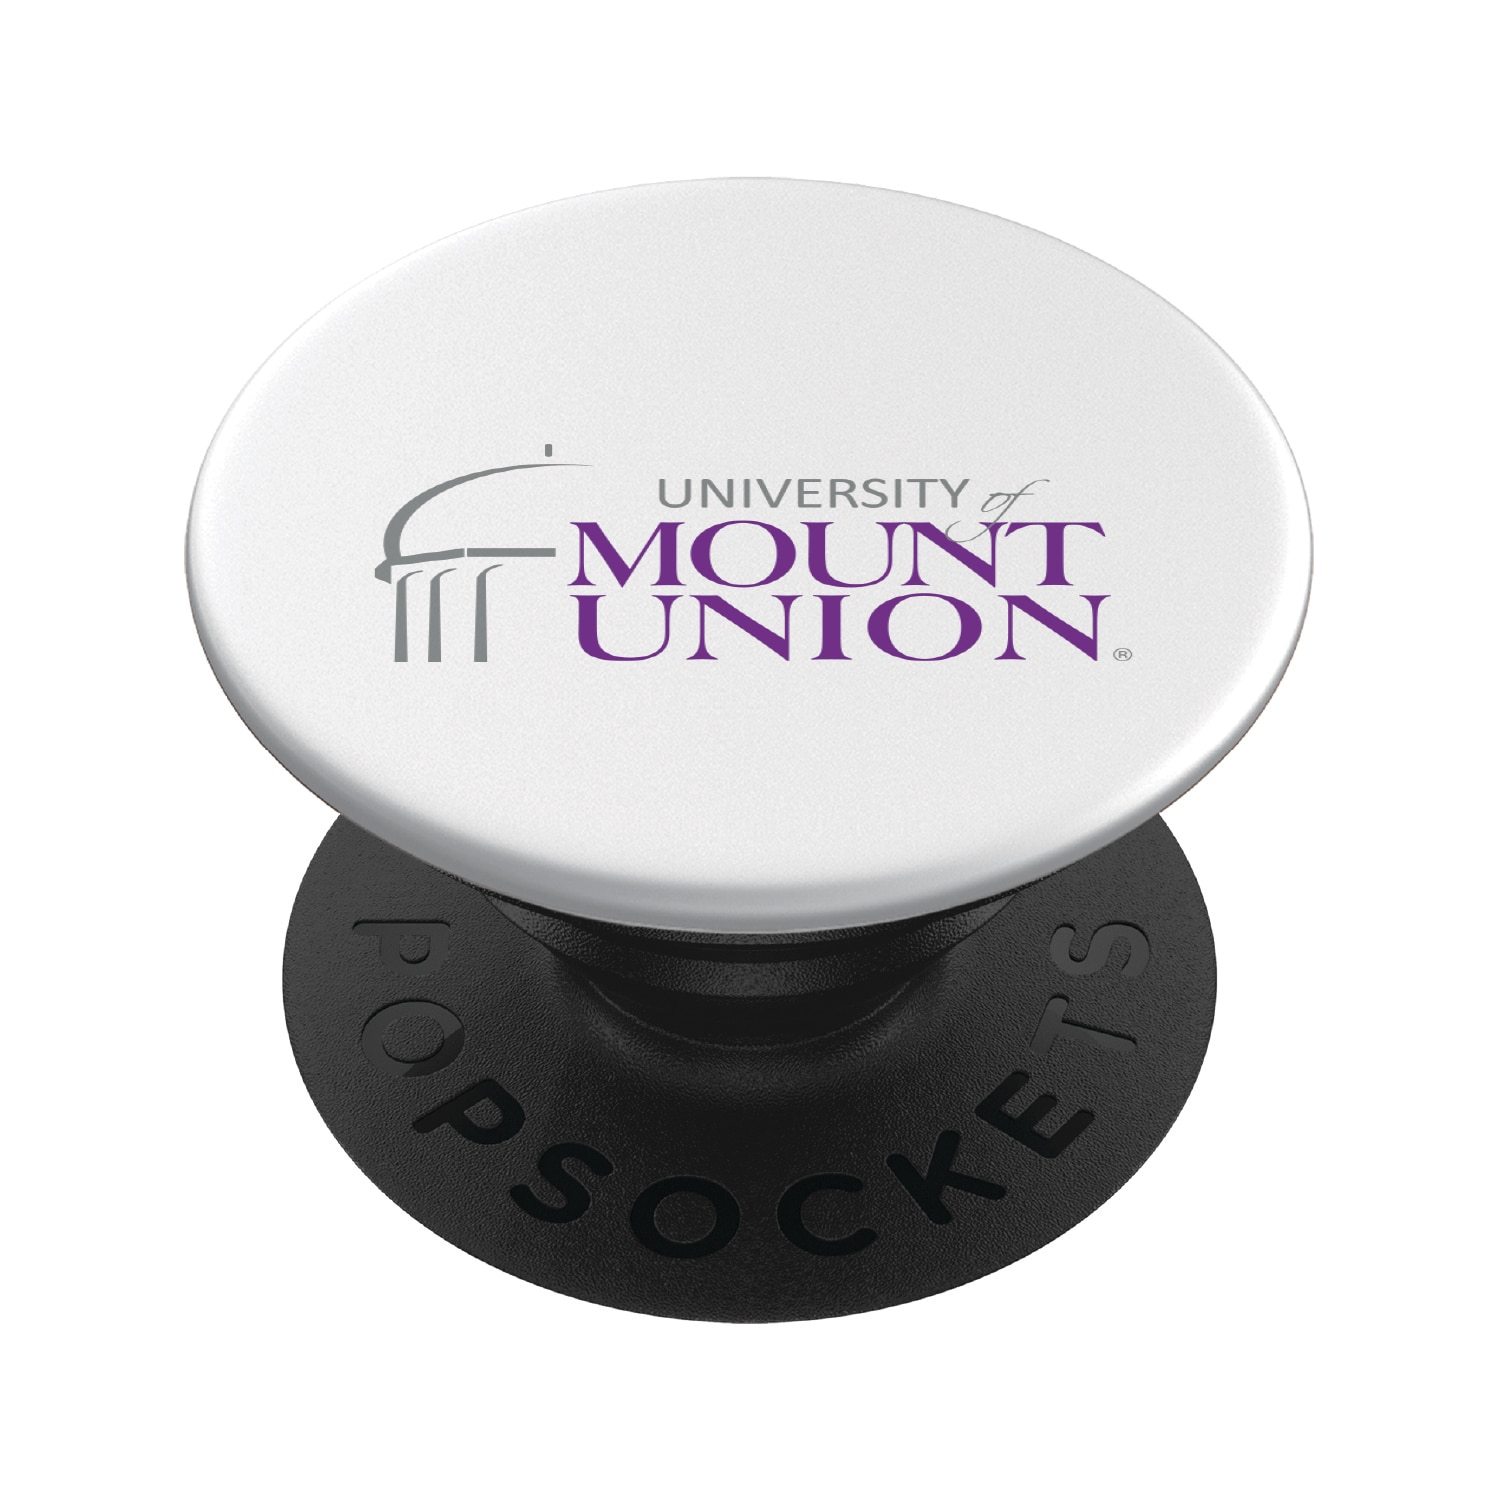 Mount Union Popsocket